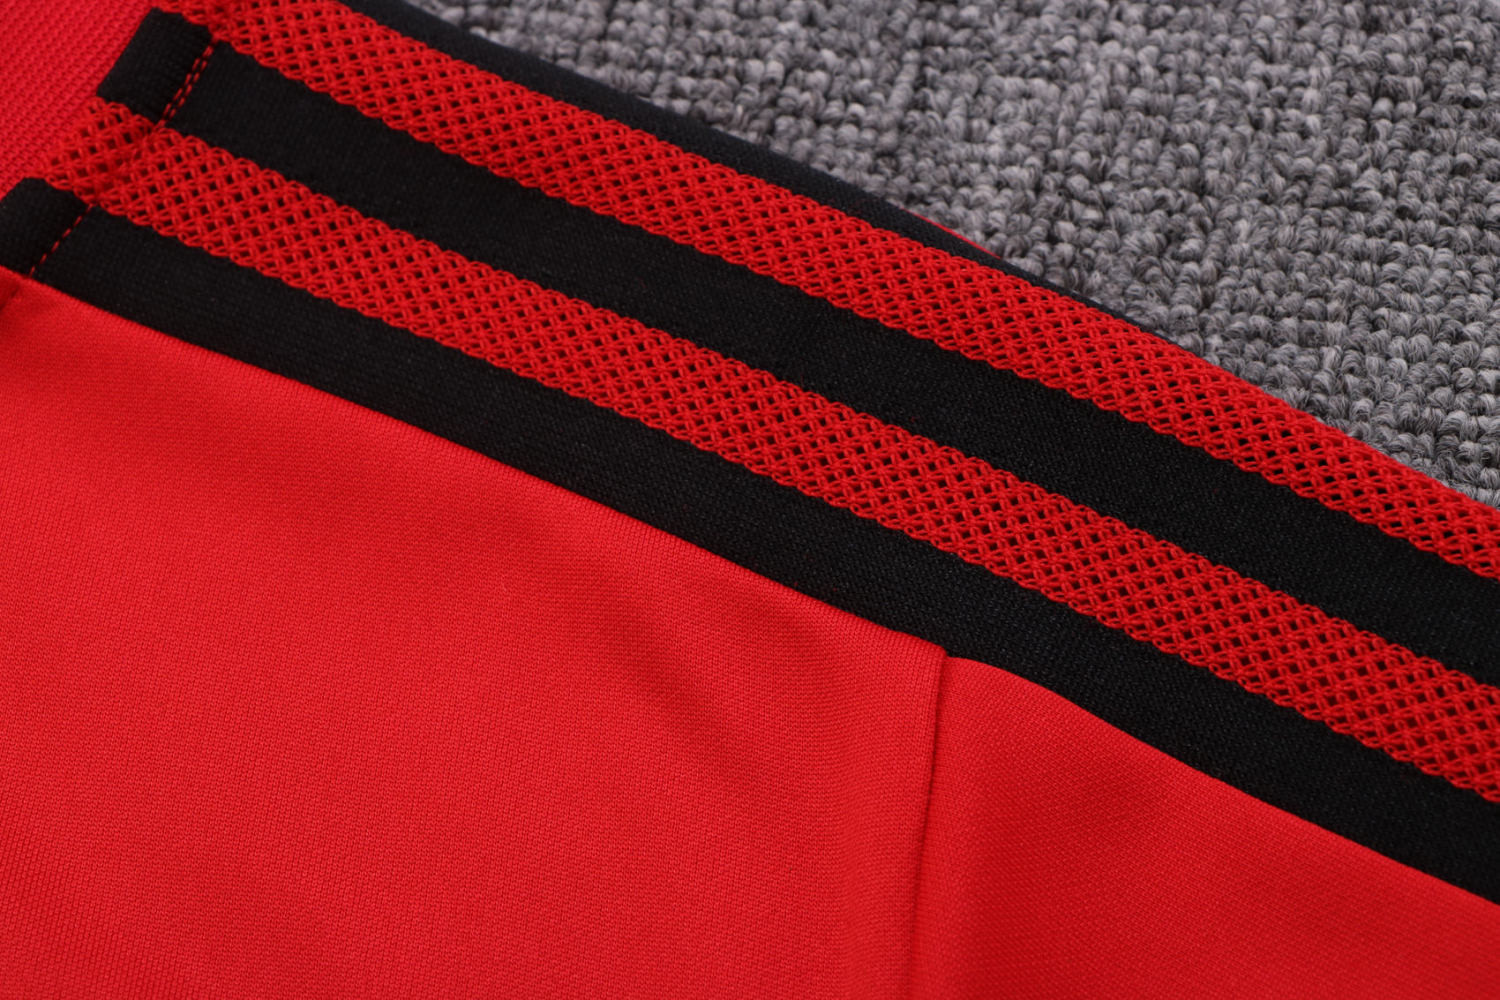 Bayern Munich Soccer Jacket + Pants Red 2022/23 Mens